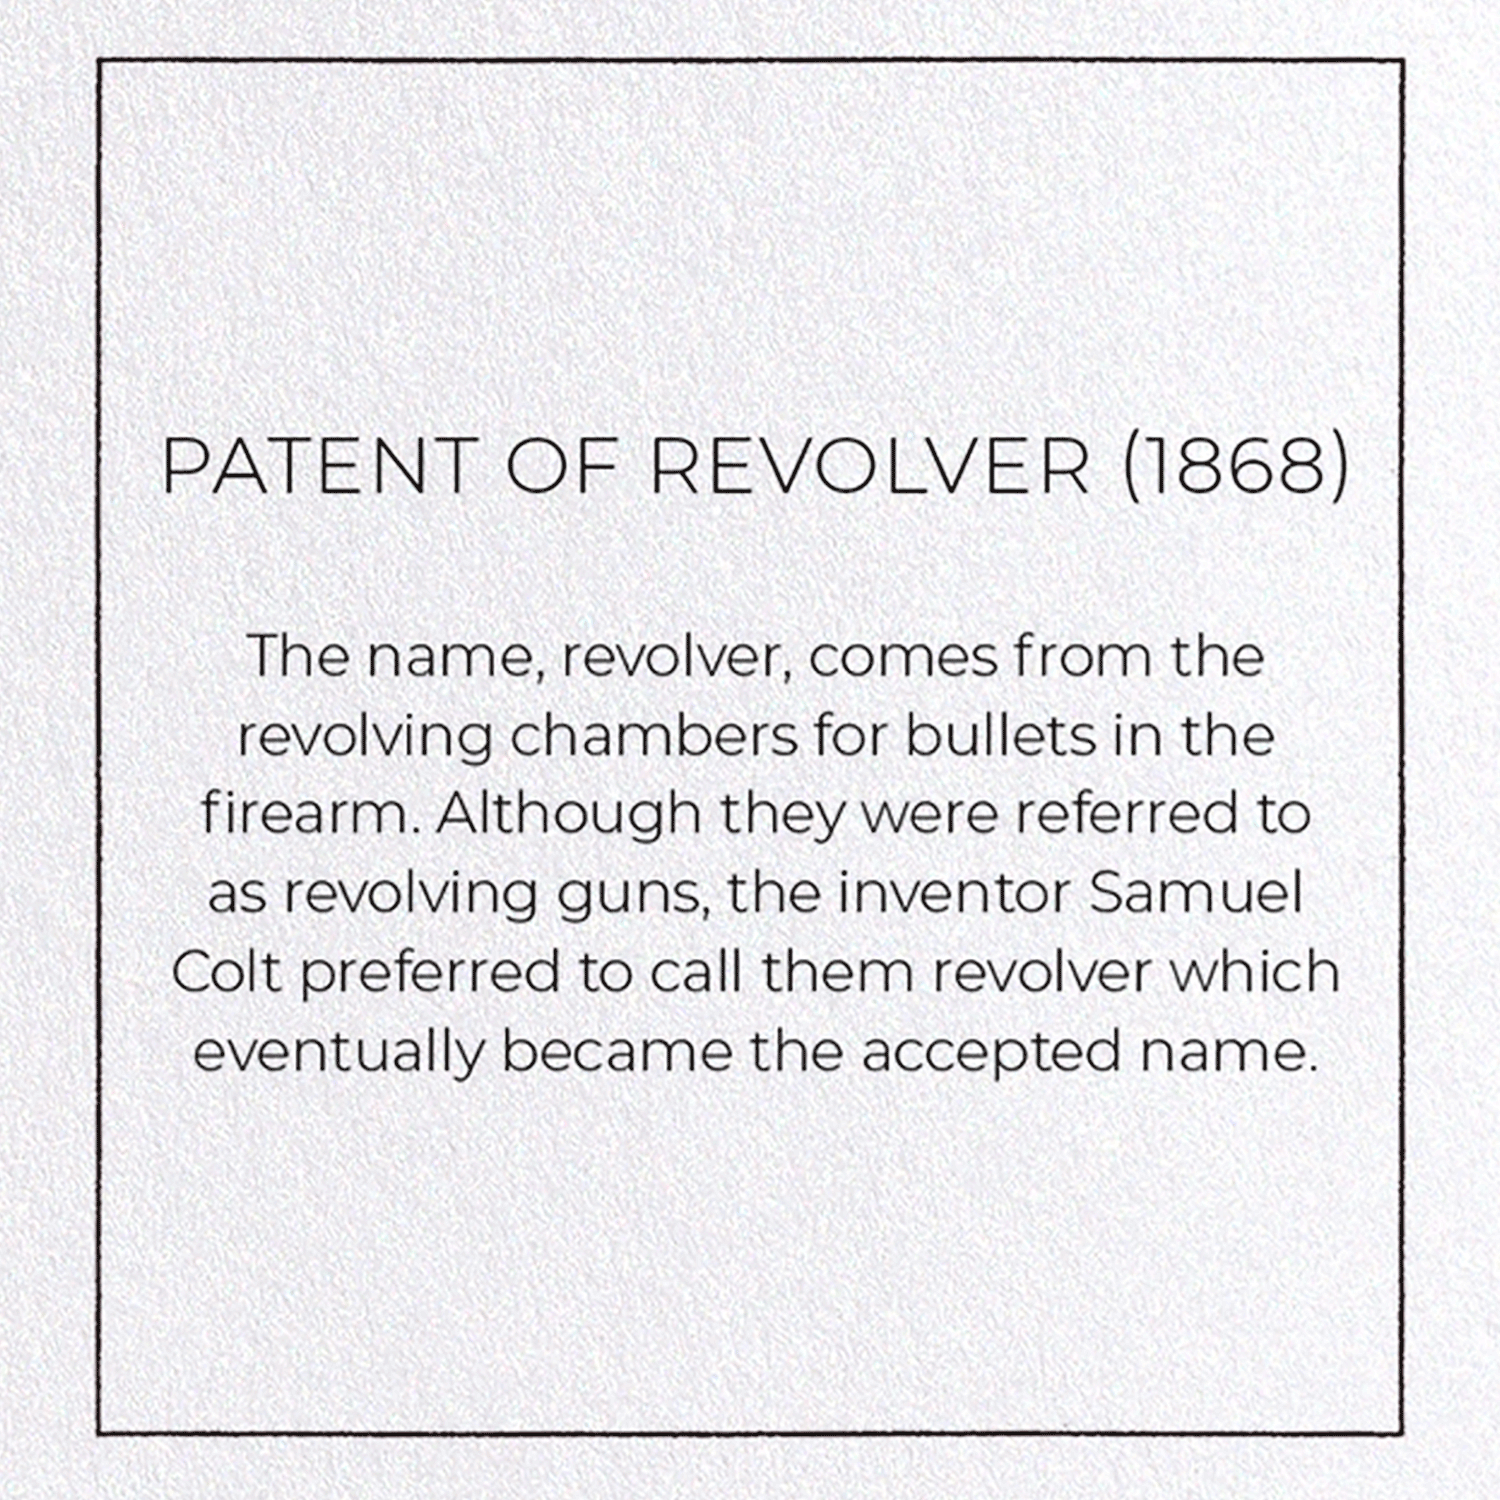 PATENT OF REVOLVER (1868)